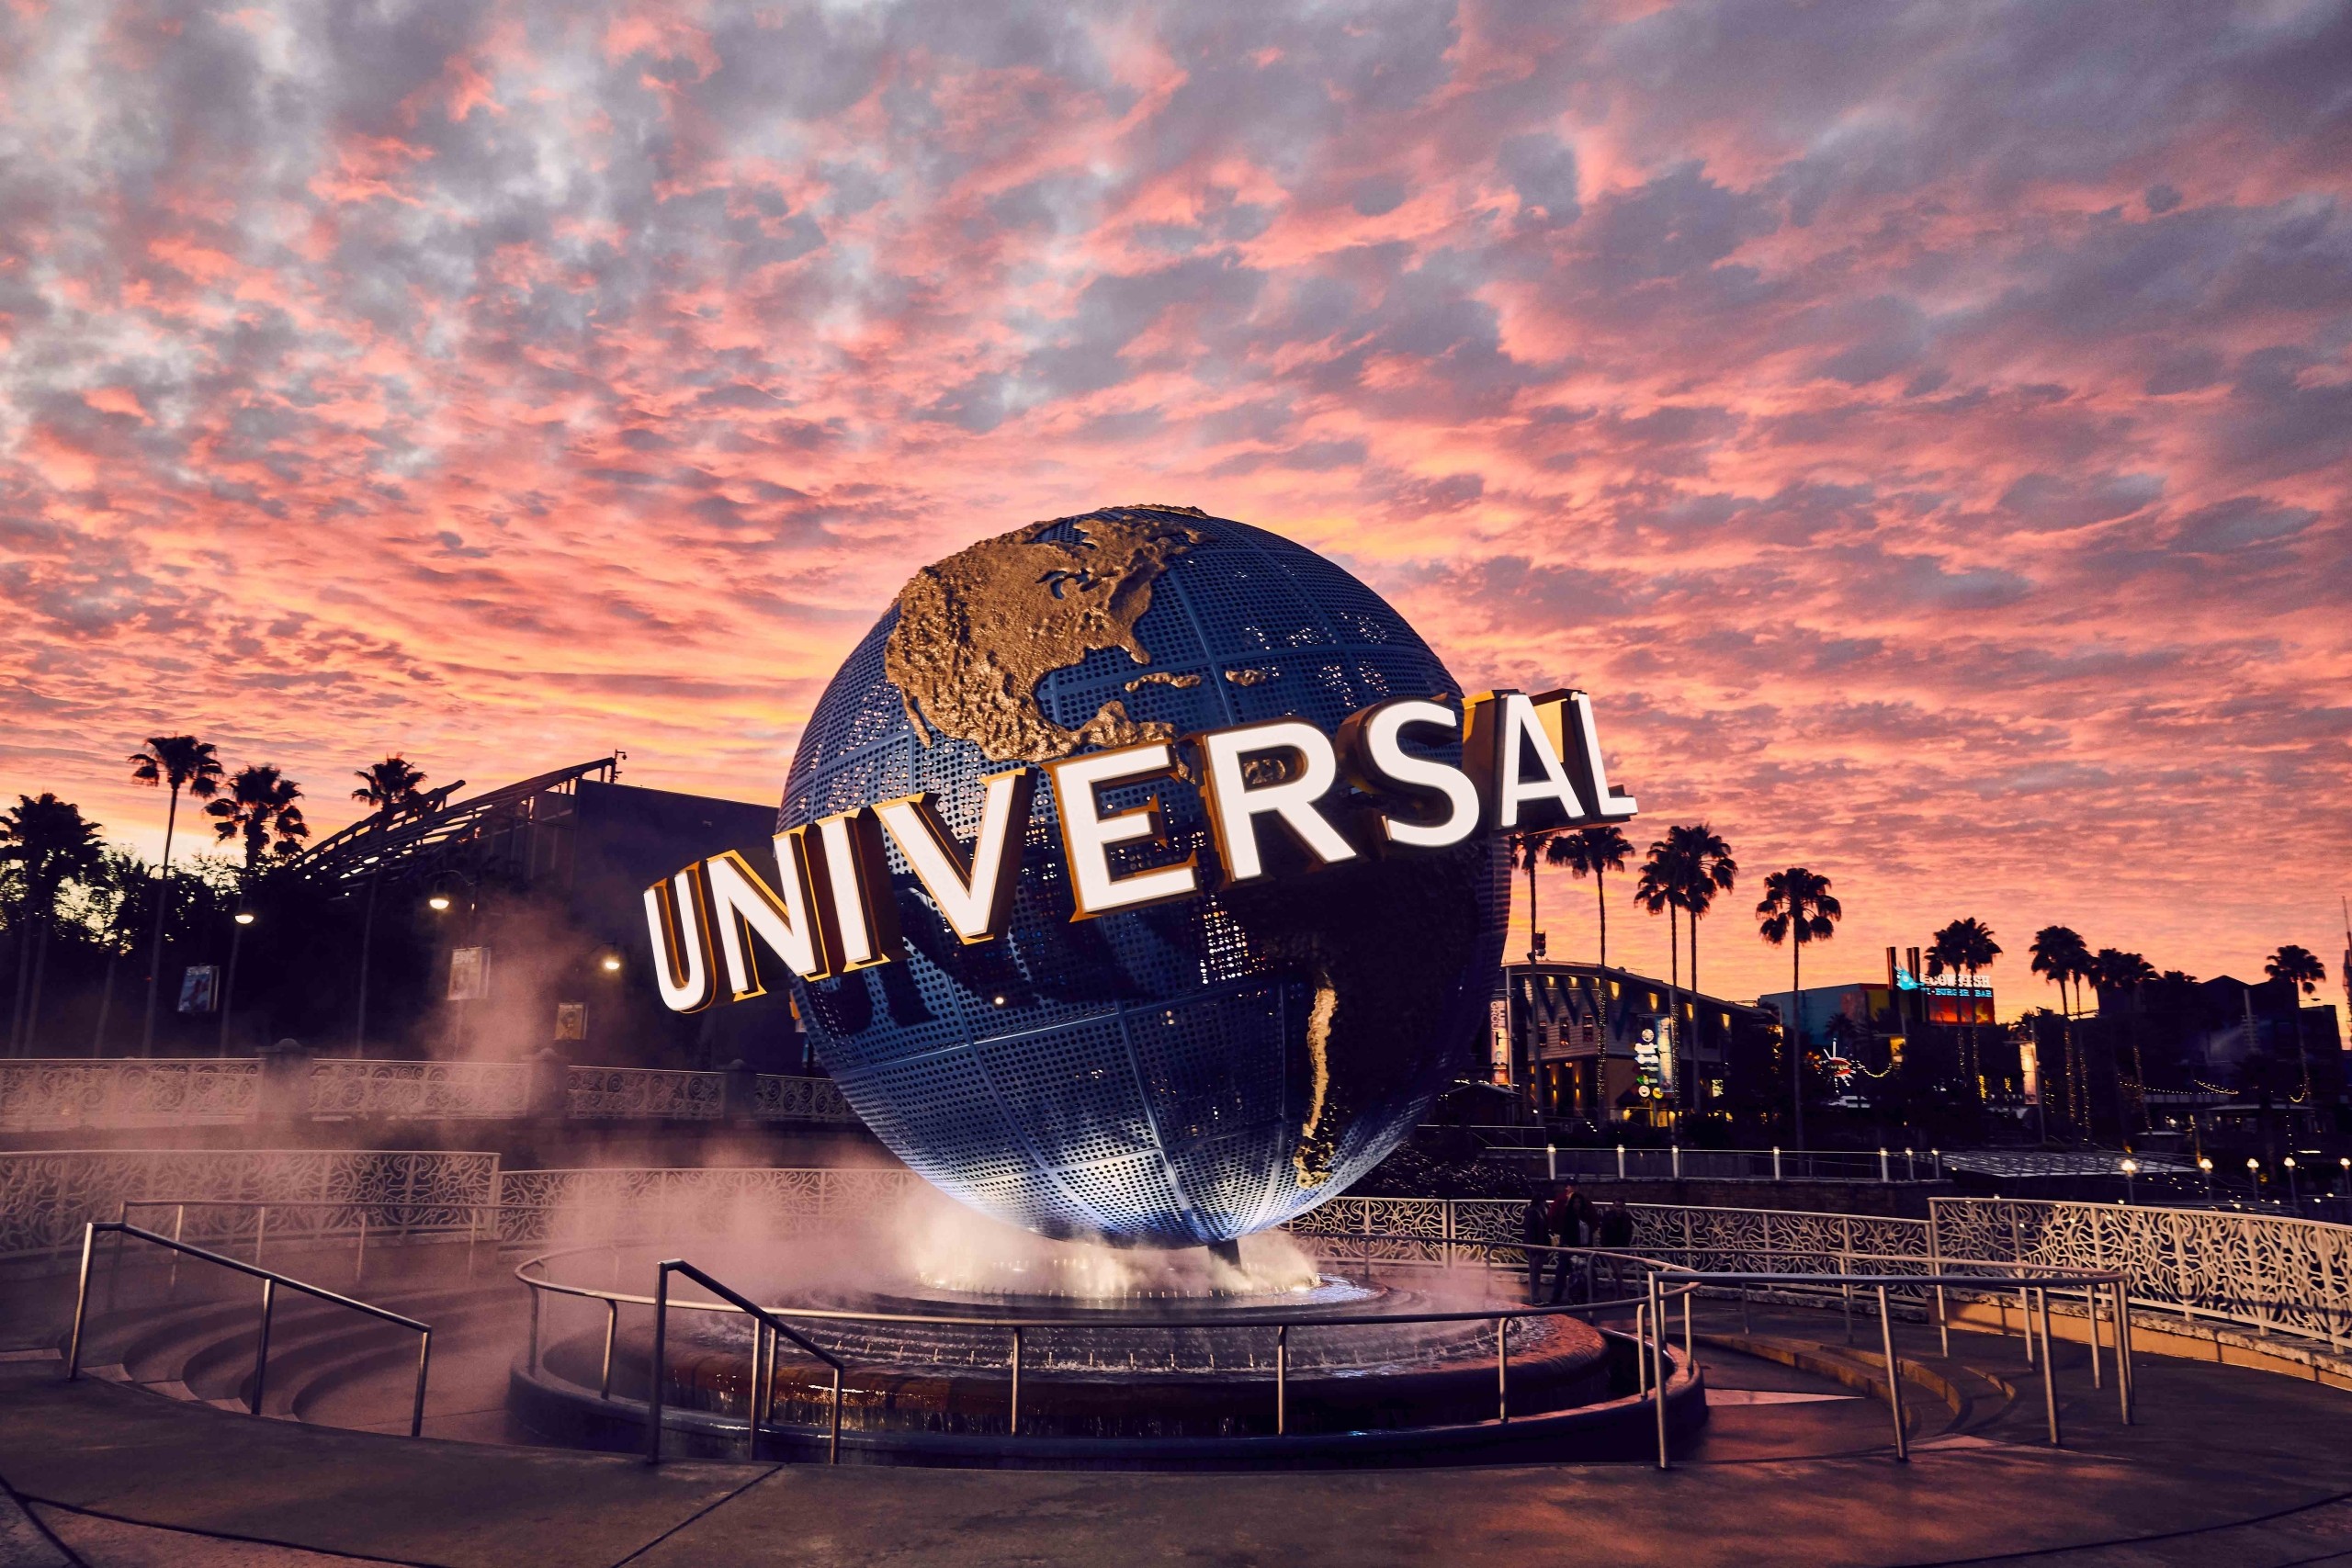 The Universal Studios globe at sunset